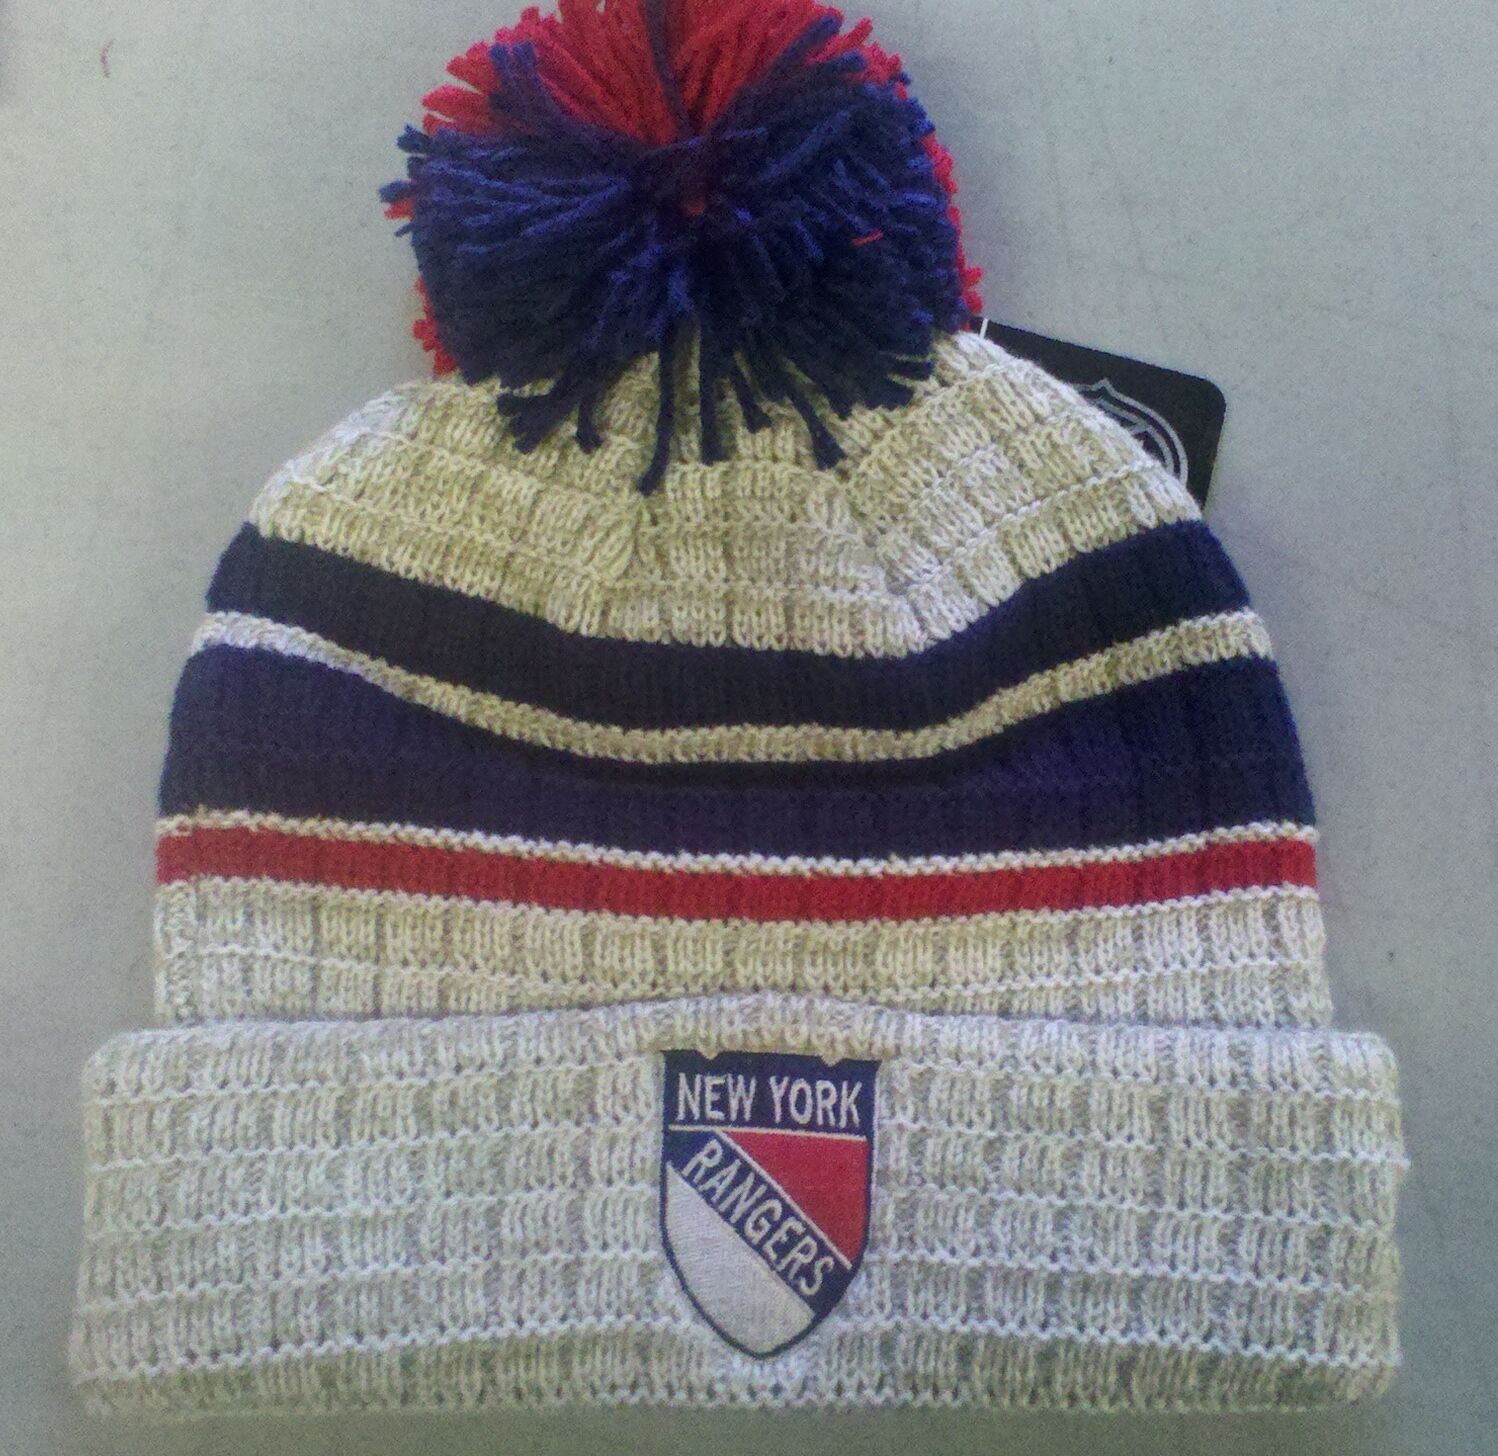 New York Rangers Knit Beanie Toque Winter Hat Skull Cap - Winter Classic Cuffed